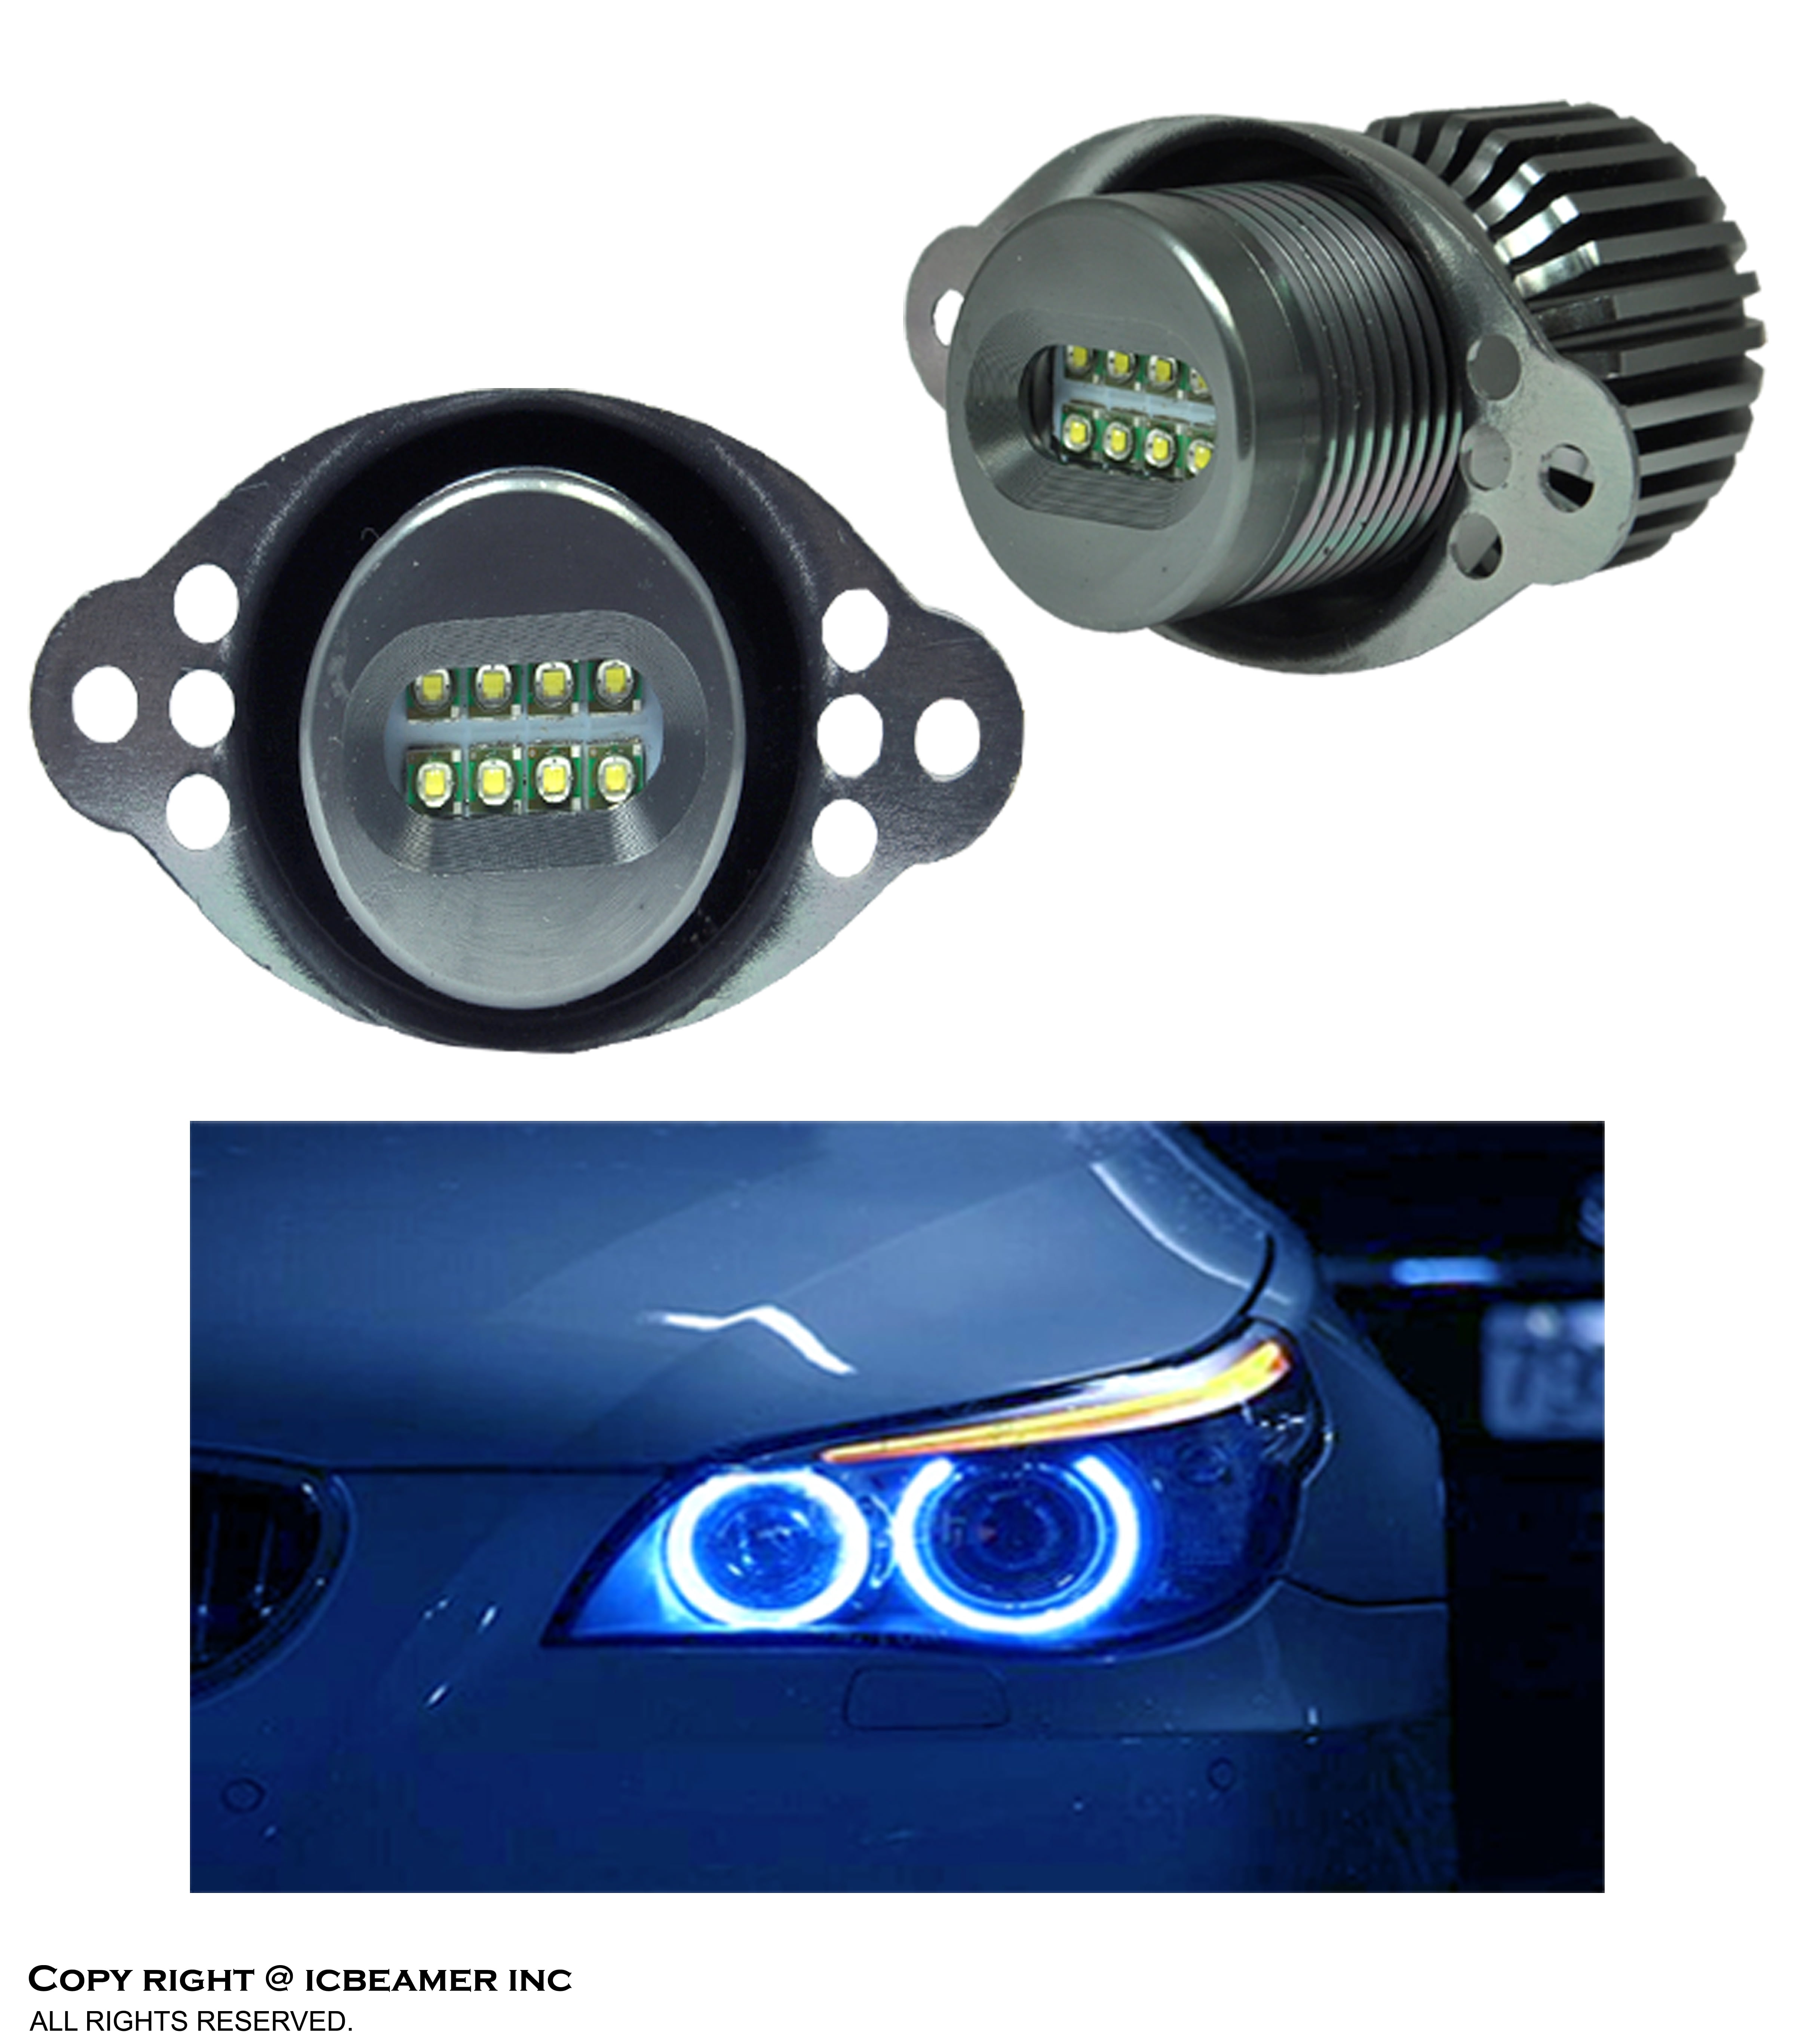 2pcs LED Angel Eye Halo Ring Marker Lights Bulbs Lamps 20W Fit BMW E90 E91 05-08